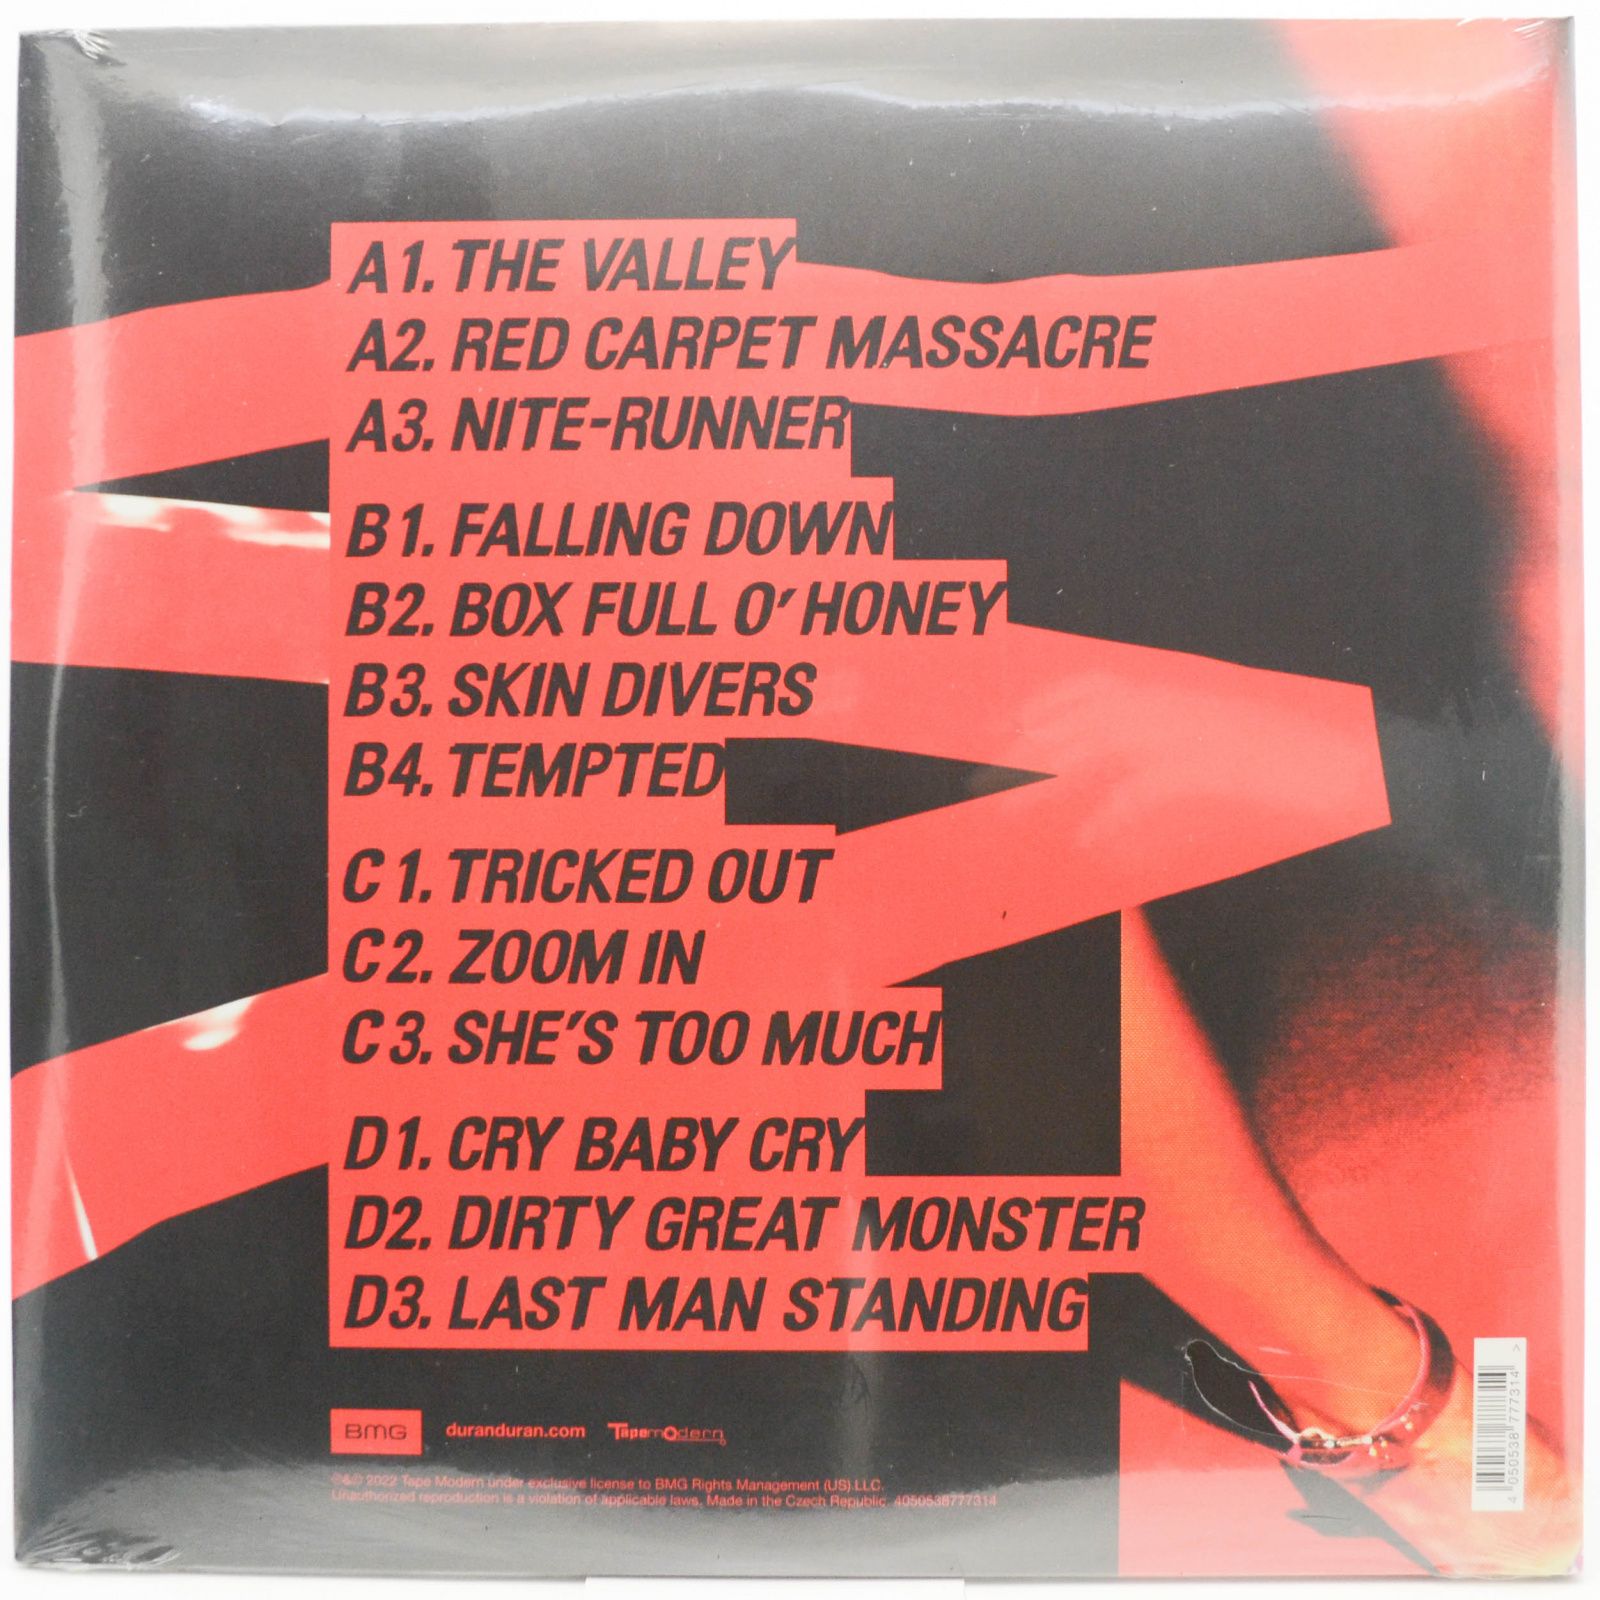 Duran Duran — Red Carpet Massacre (2LP), 2007